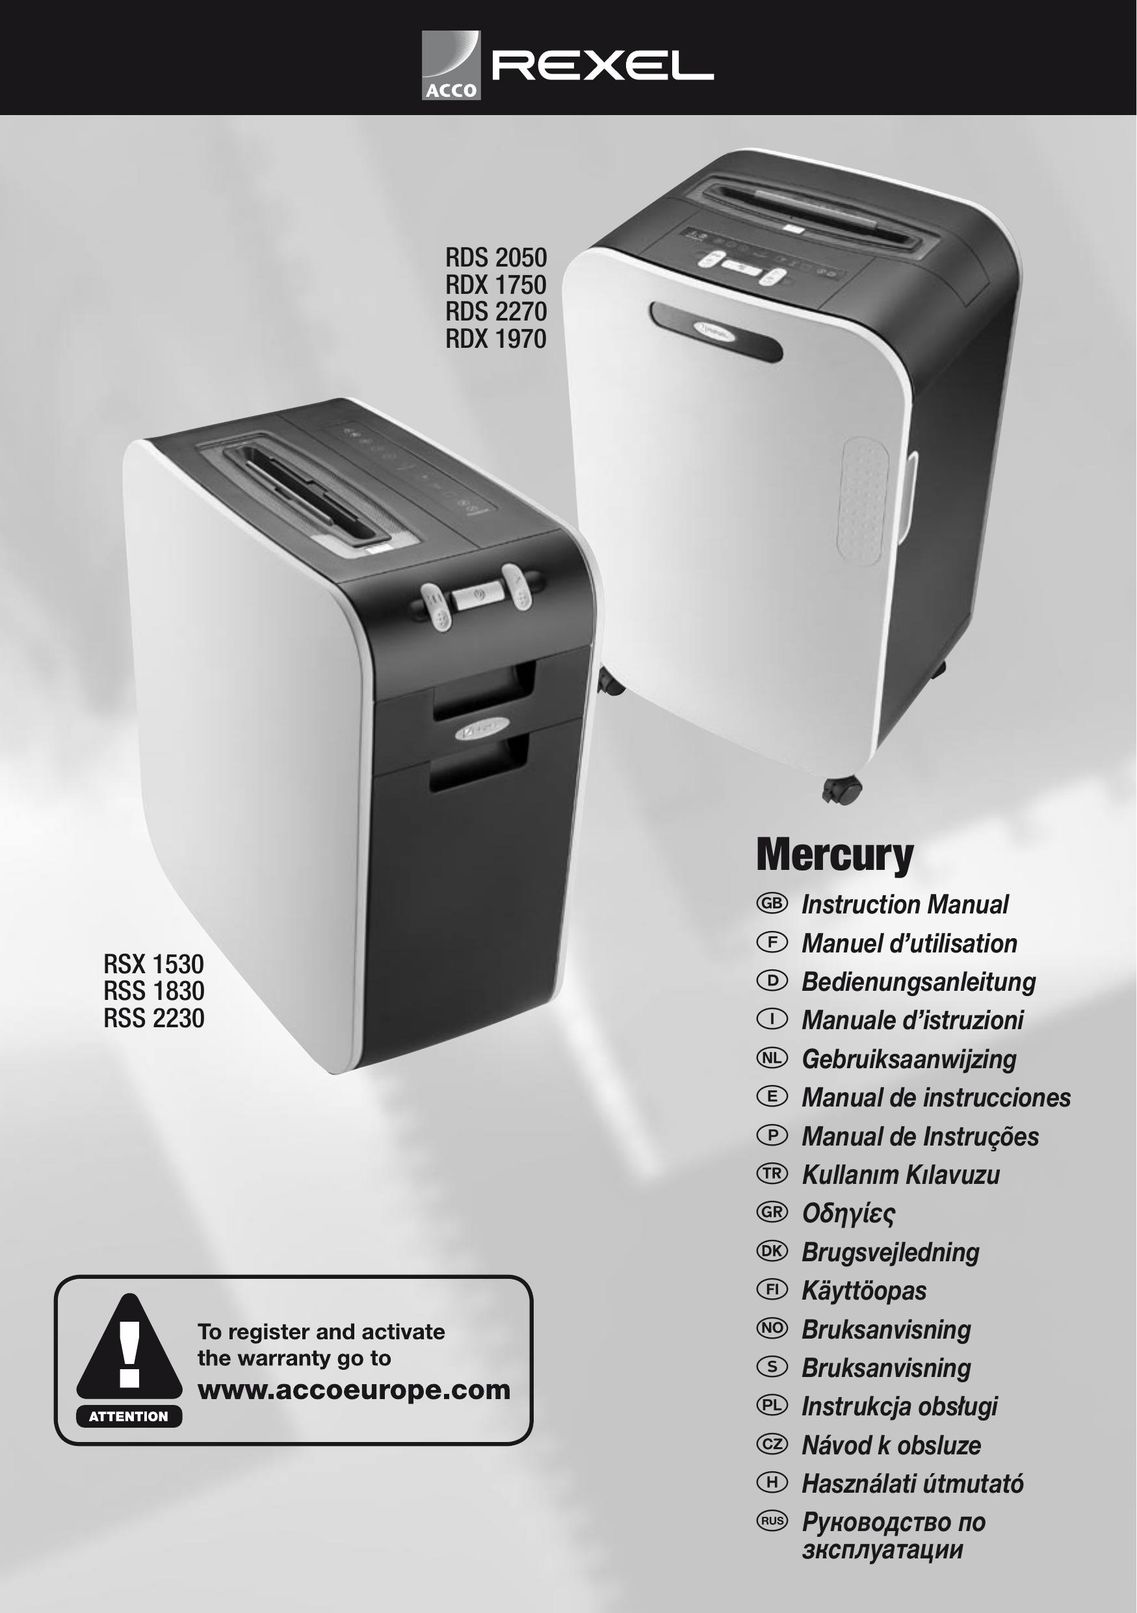 ACCO Brands RDS 2270 Paper Shredder User Manual